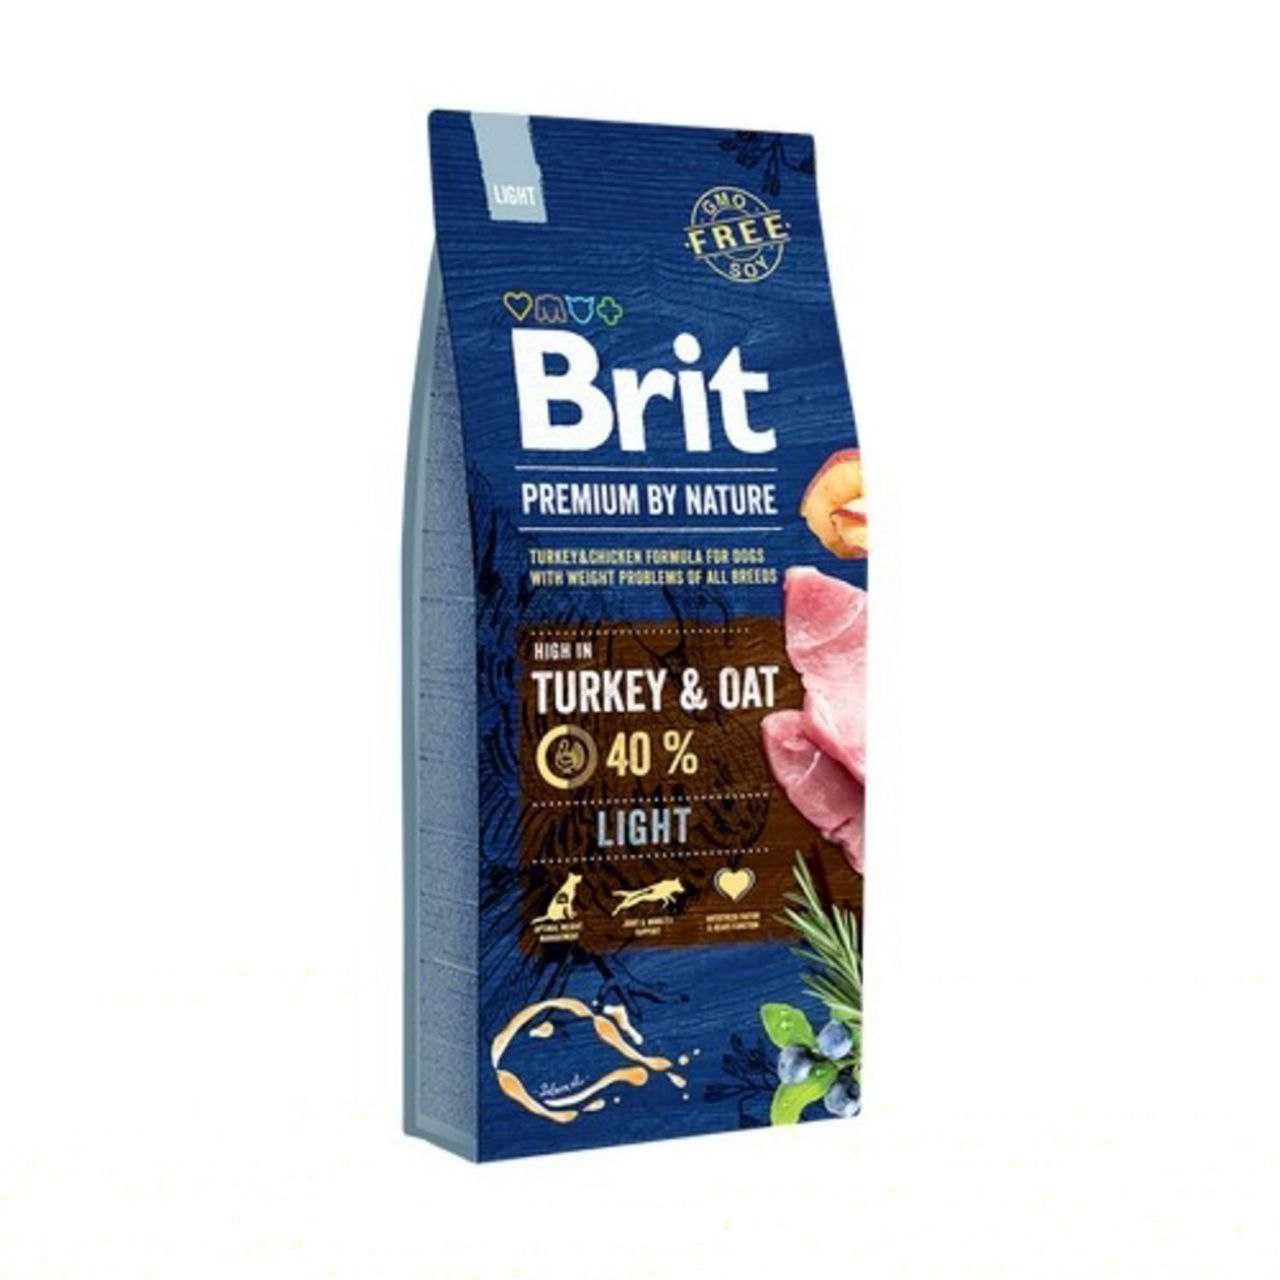 корм для собак Brit Premium by Nature Light с лишним весом 15кг